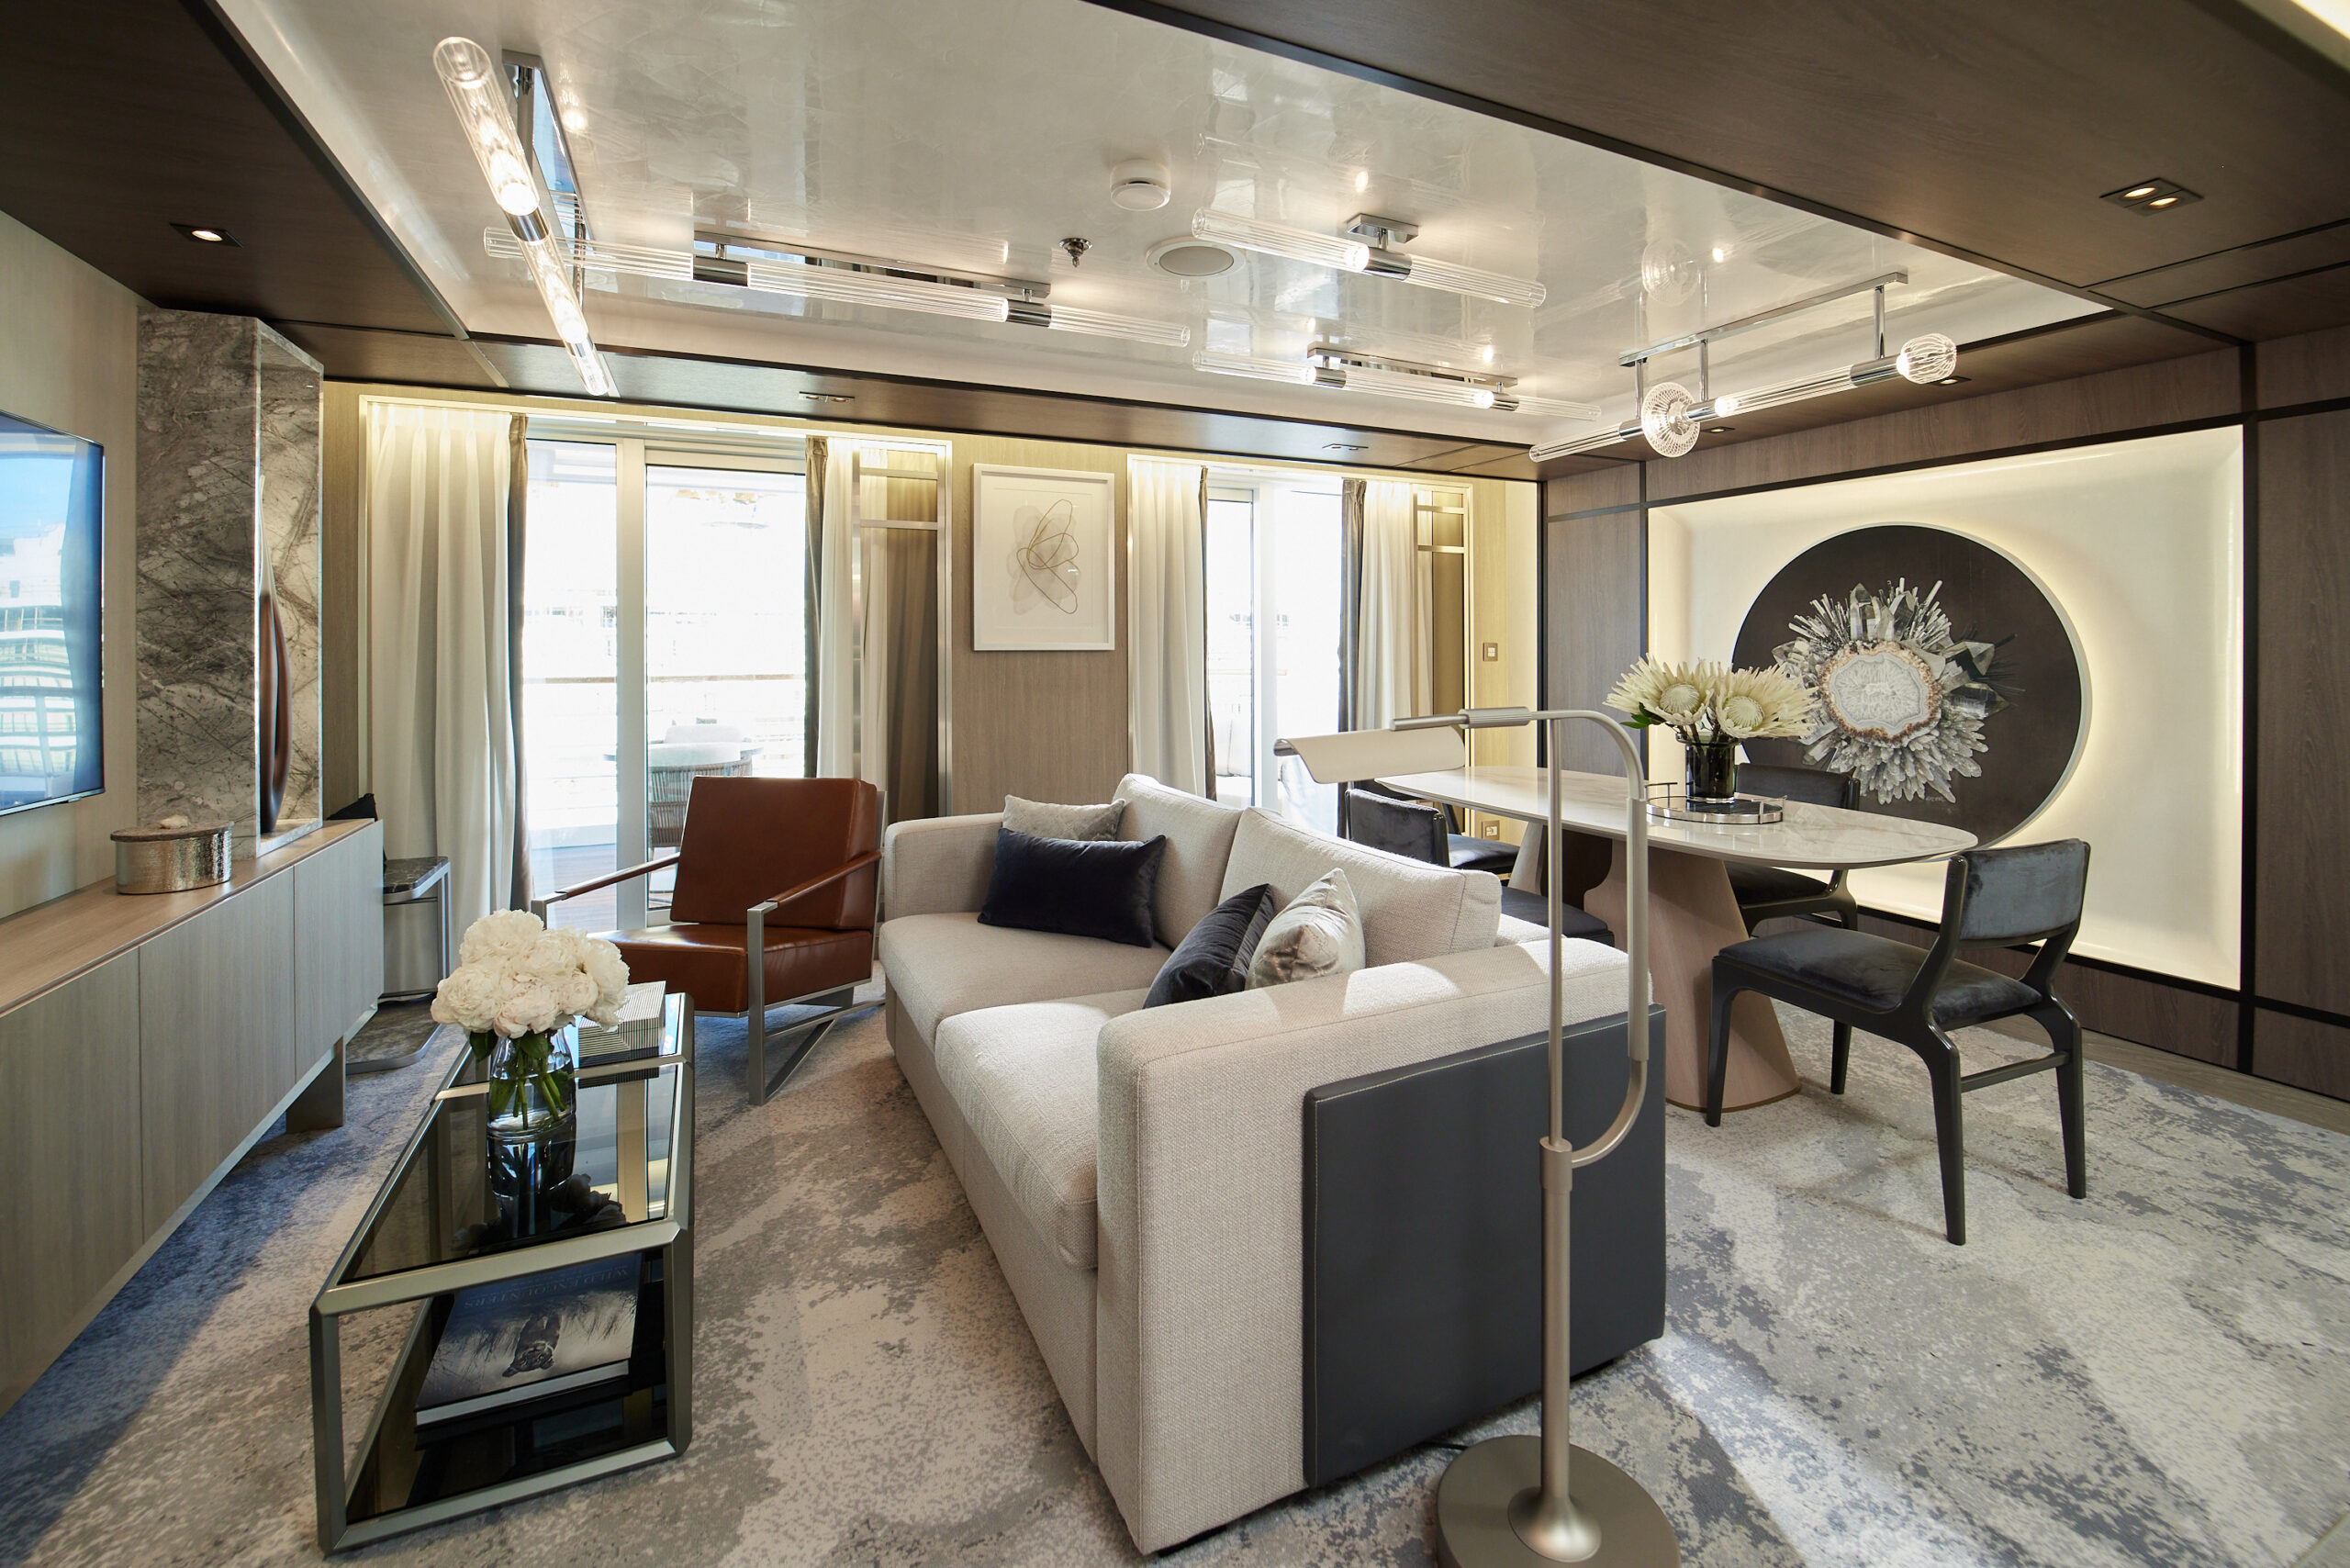 The living room of the Grandeur suite